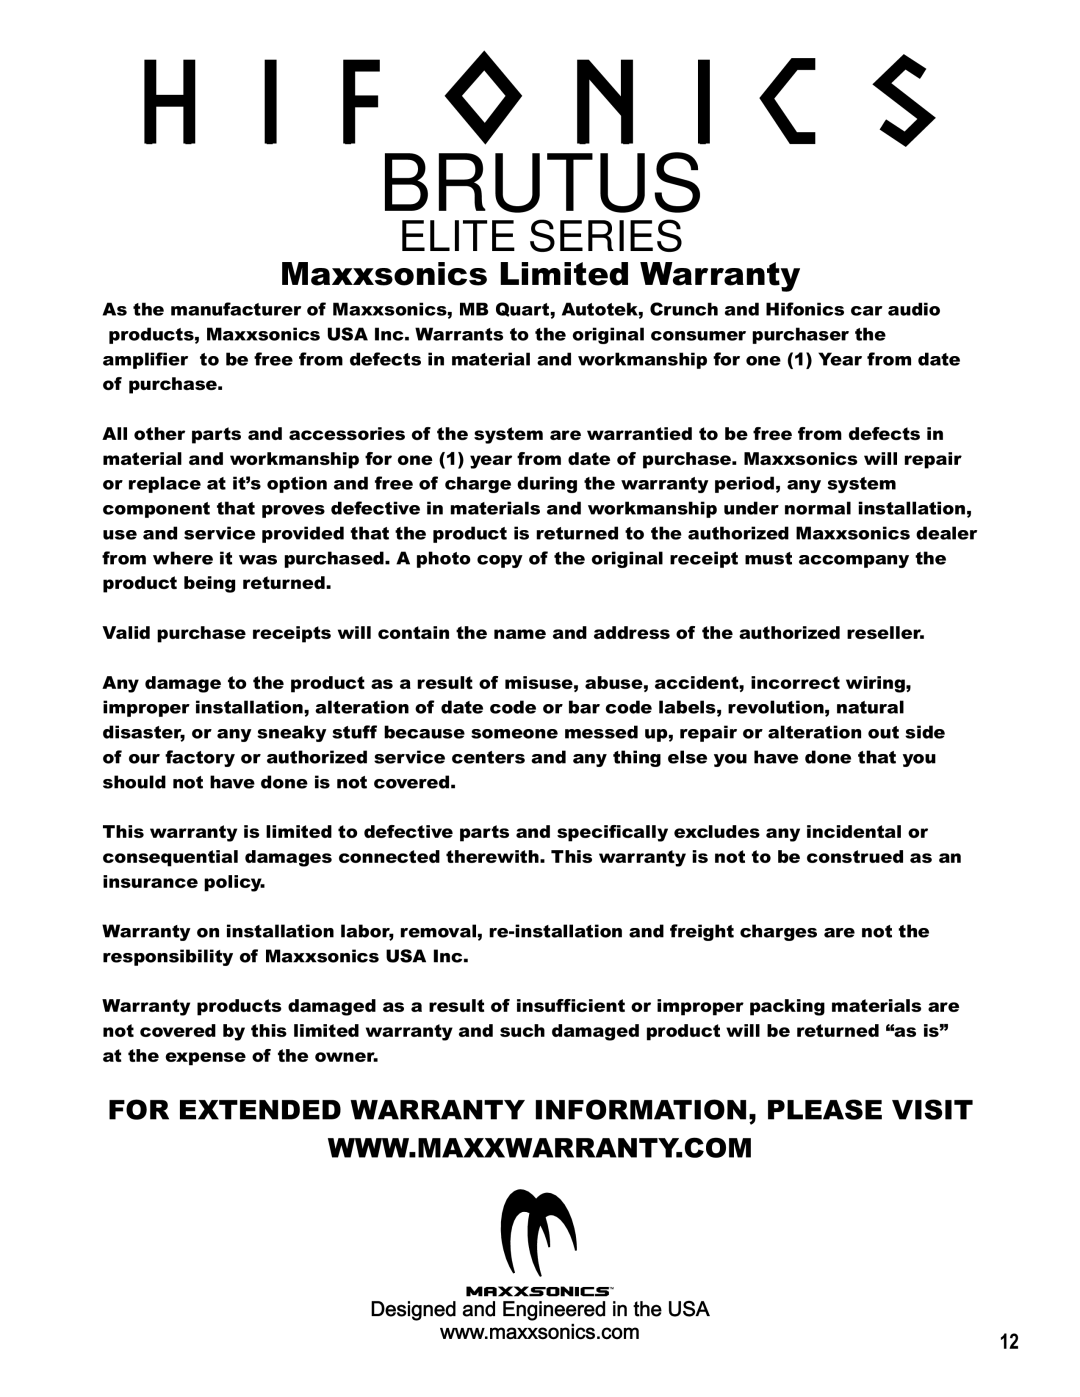 Hifionics BRE60.4 manual Brutus, Elite Series, Maxxsonics Limited Warranty, For Extended Warranty Information, Please Visit 